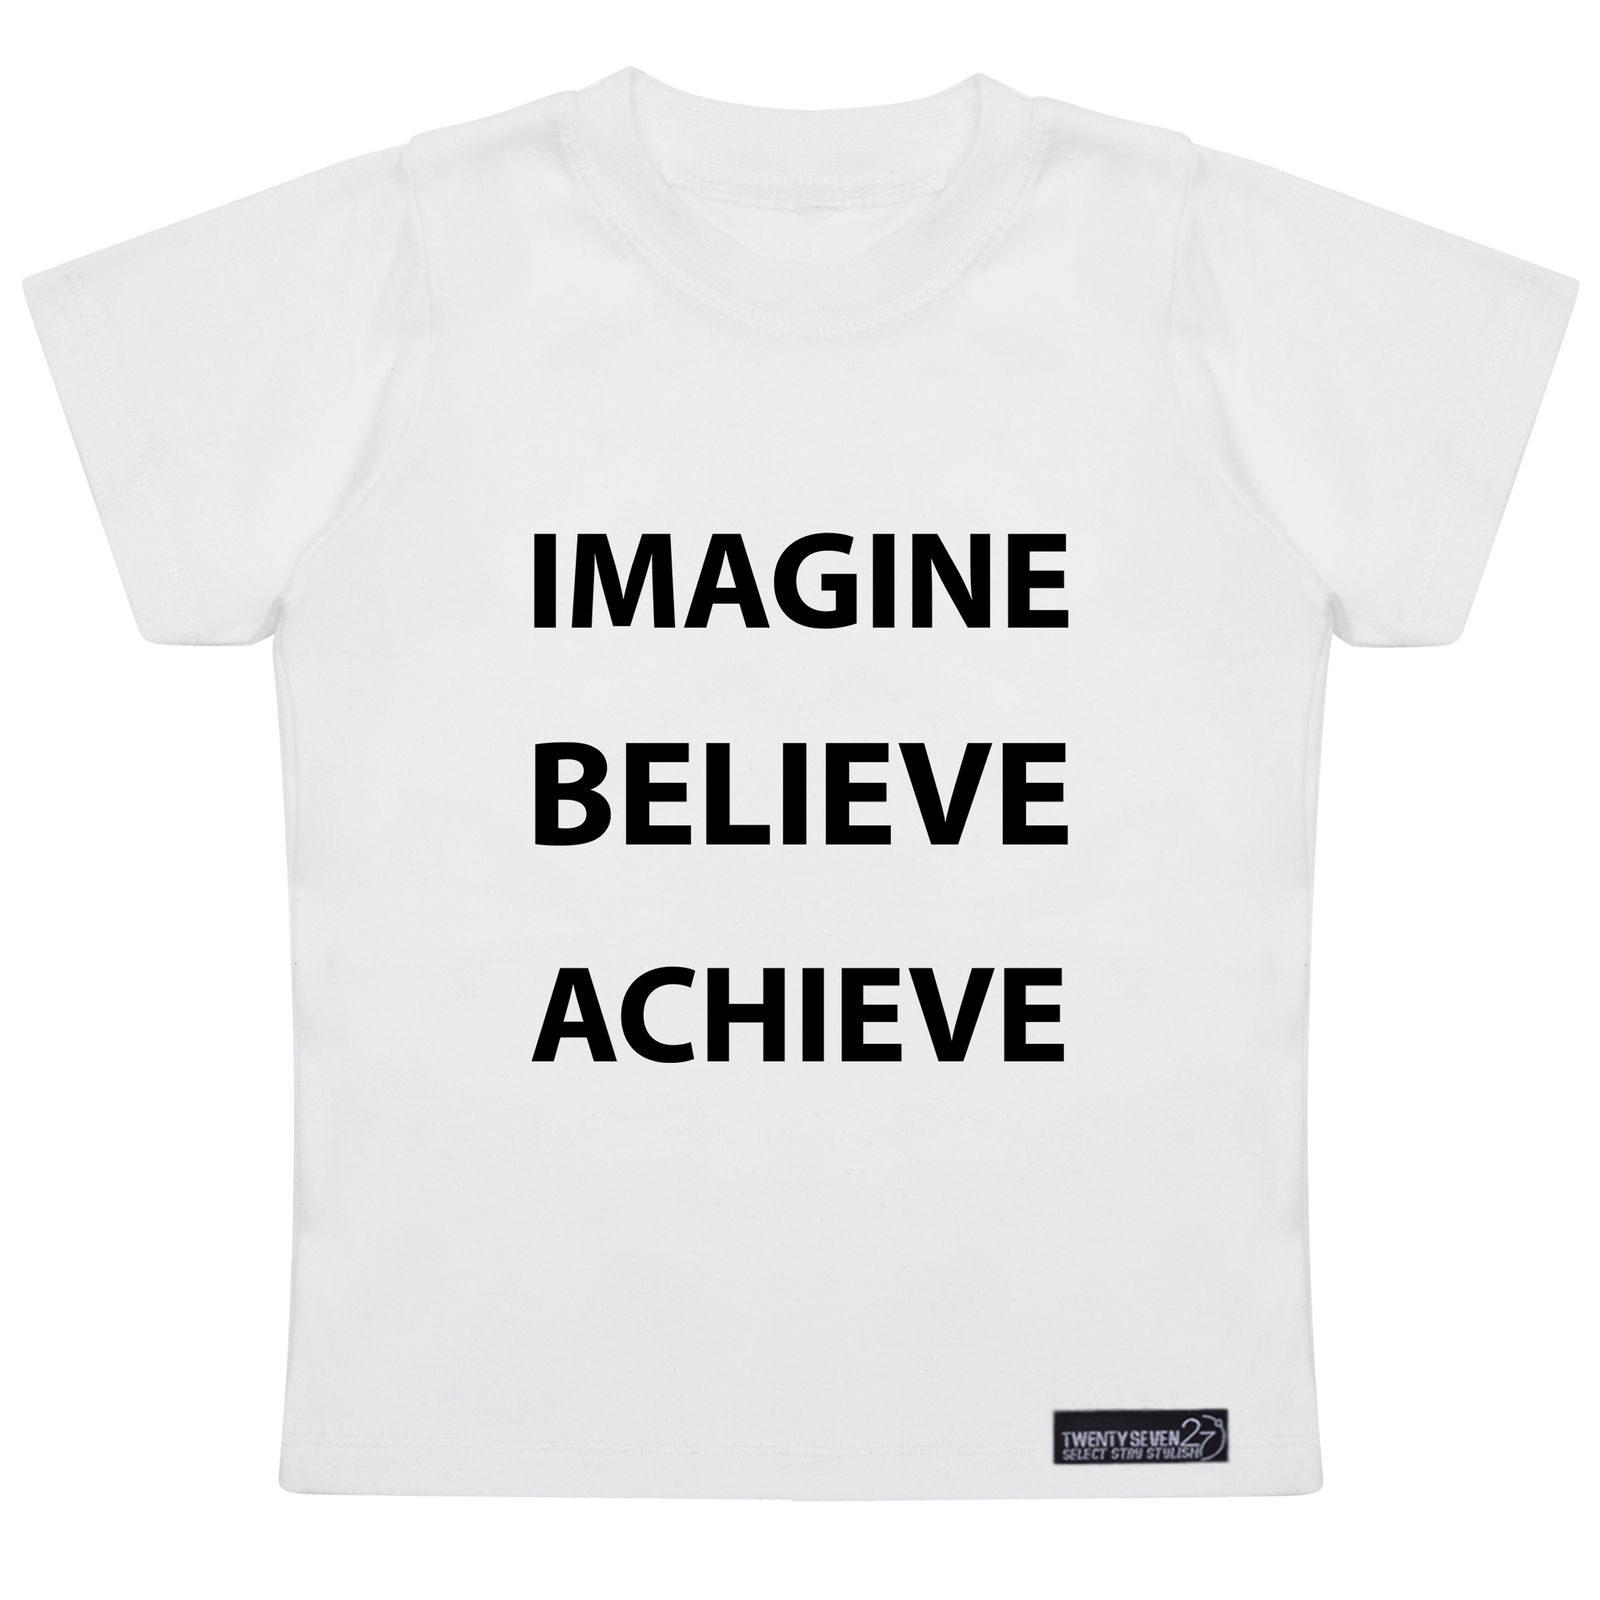 تی شرت آستین کوتاه پسرانه 27 مدل Imagine Believe Achieve کد MH971 -  - 4